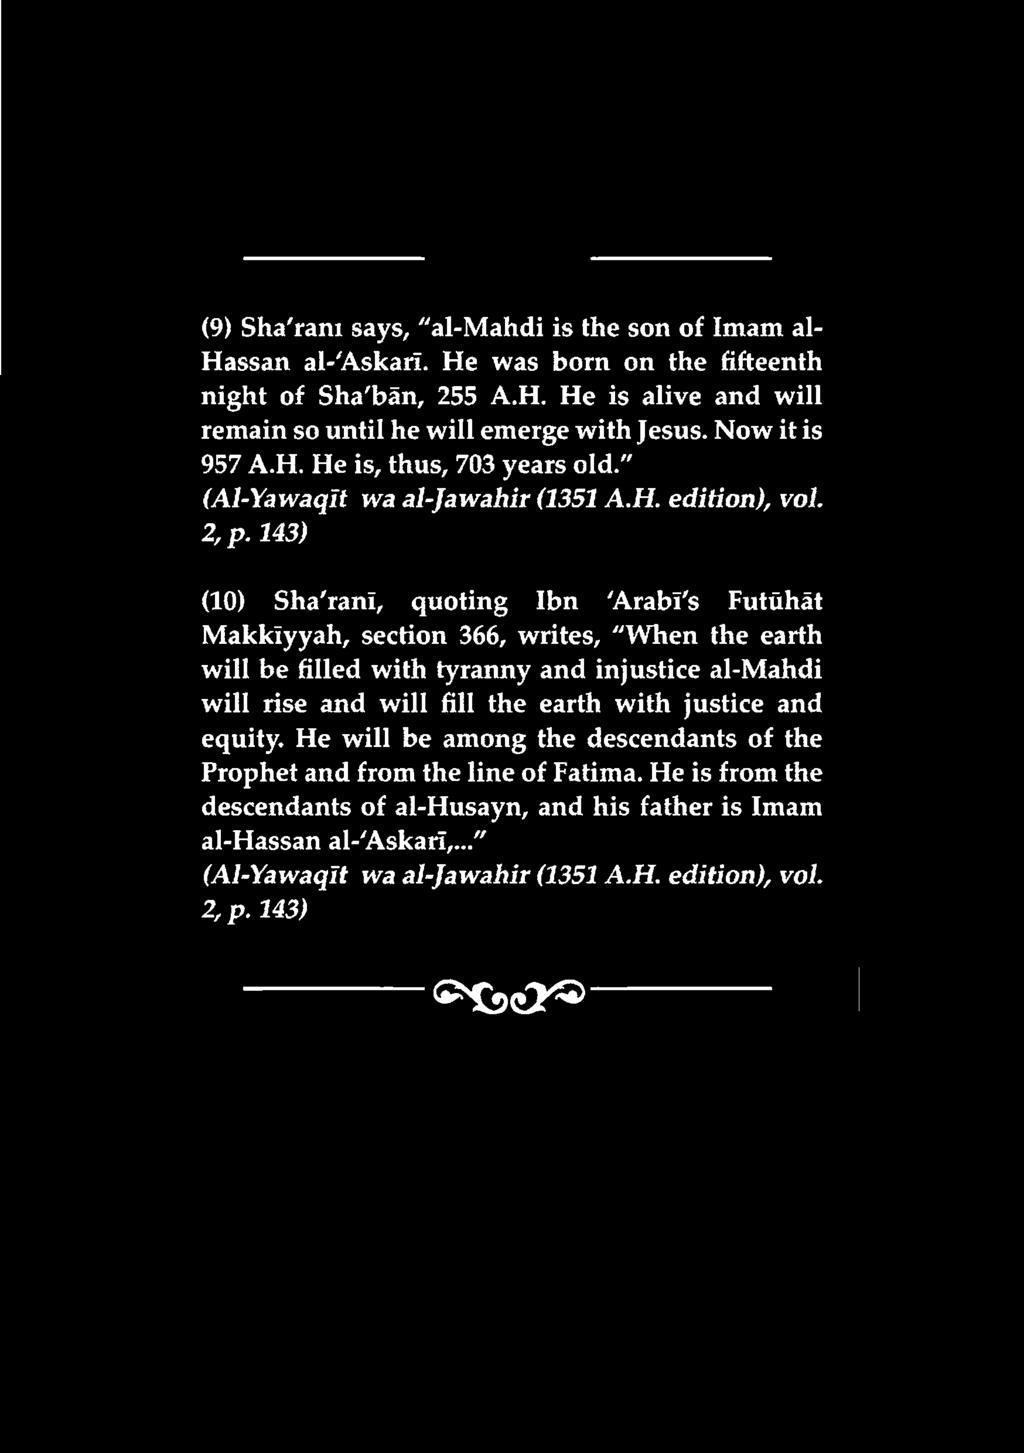 " (Al-Yawaqlt wa al-jawahir (1351 A.H. edition), vol. 2, p.